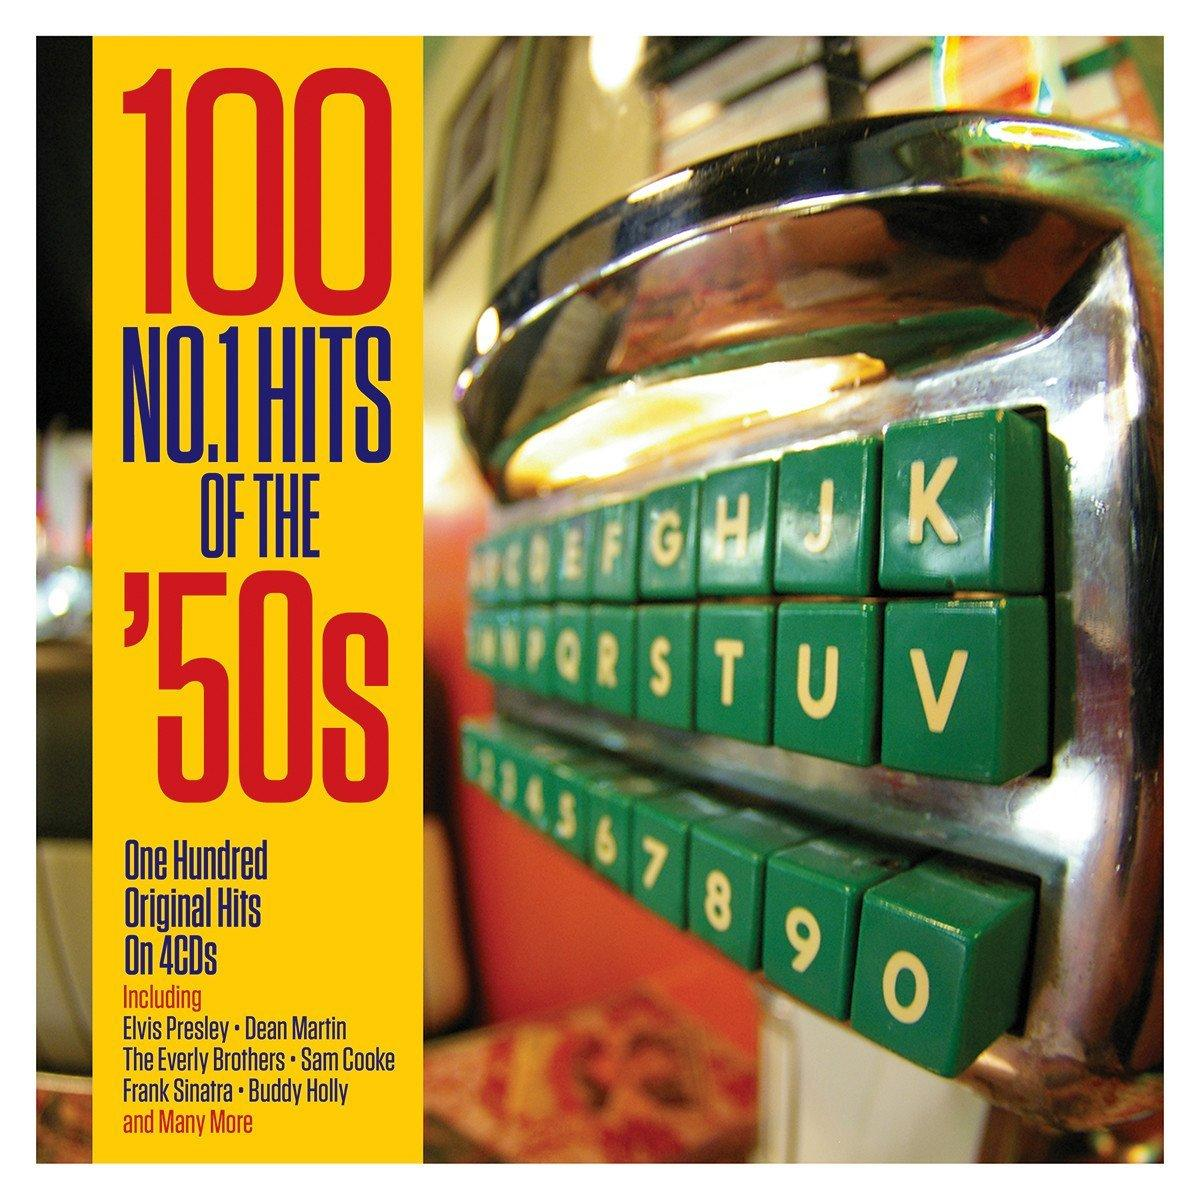 Hits Of the - VARIOUS 50s - 100 No.1 (CD)